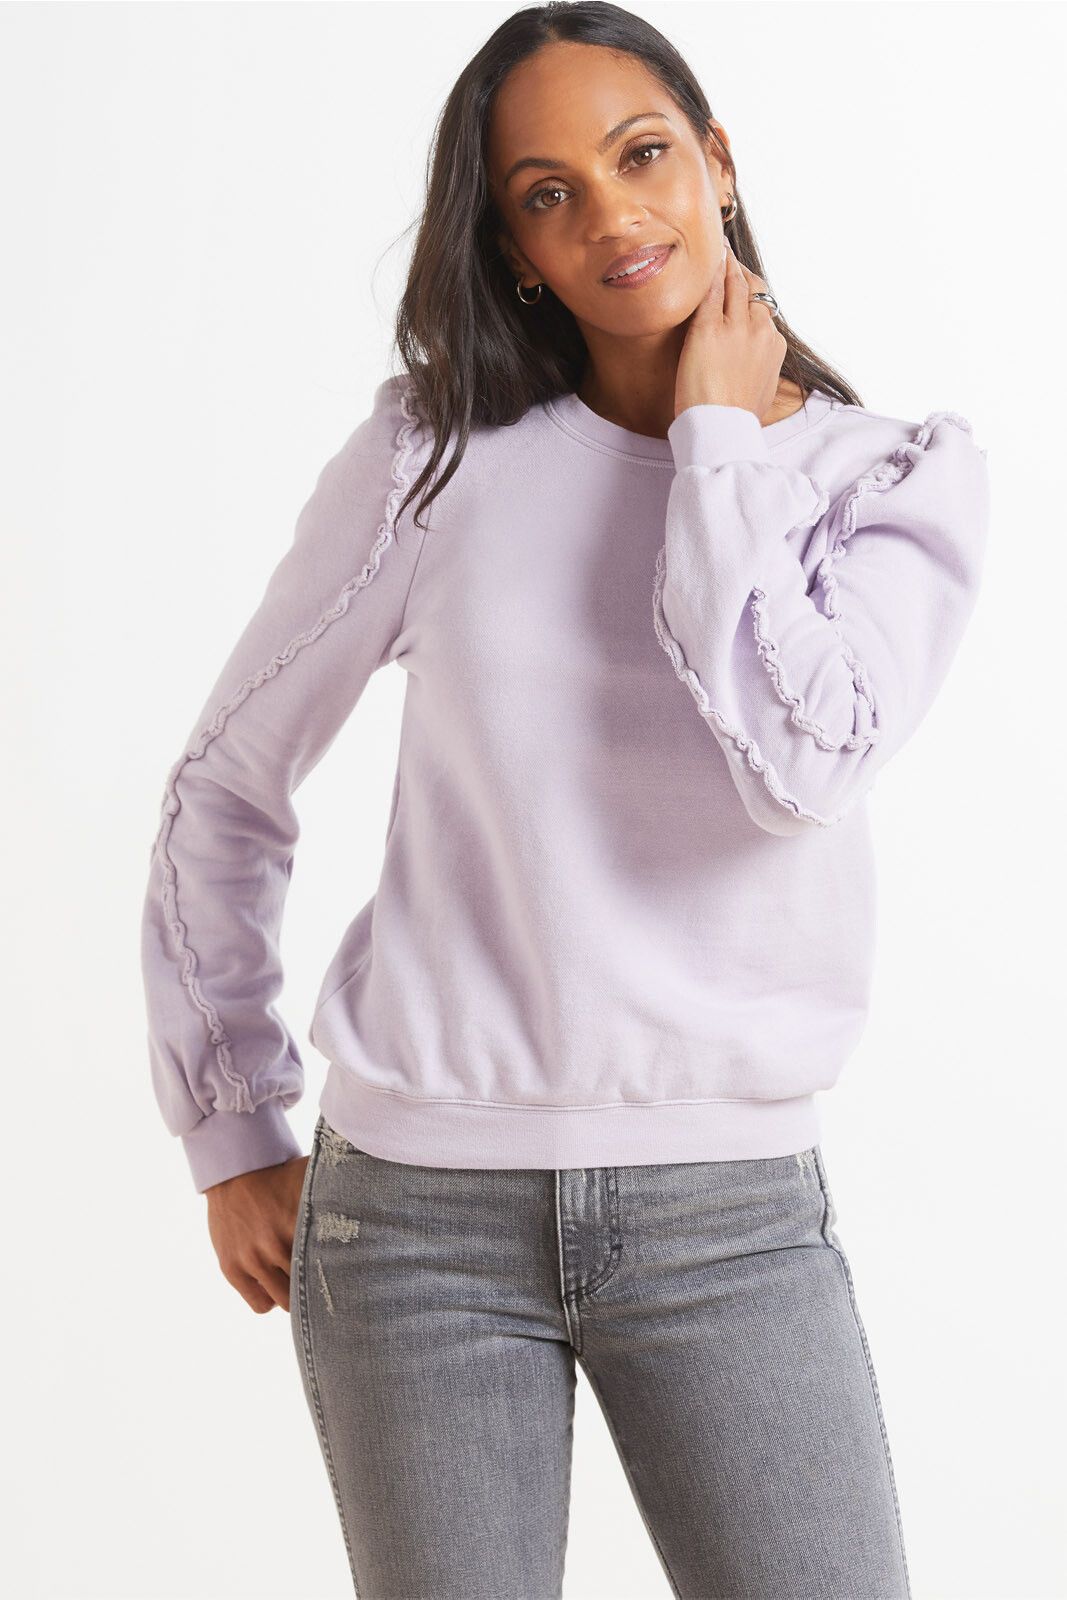 EVEREVE Lucy Ruffle Sleeve Sweatshirt | EVEREVE | Evereve